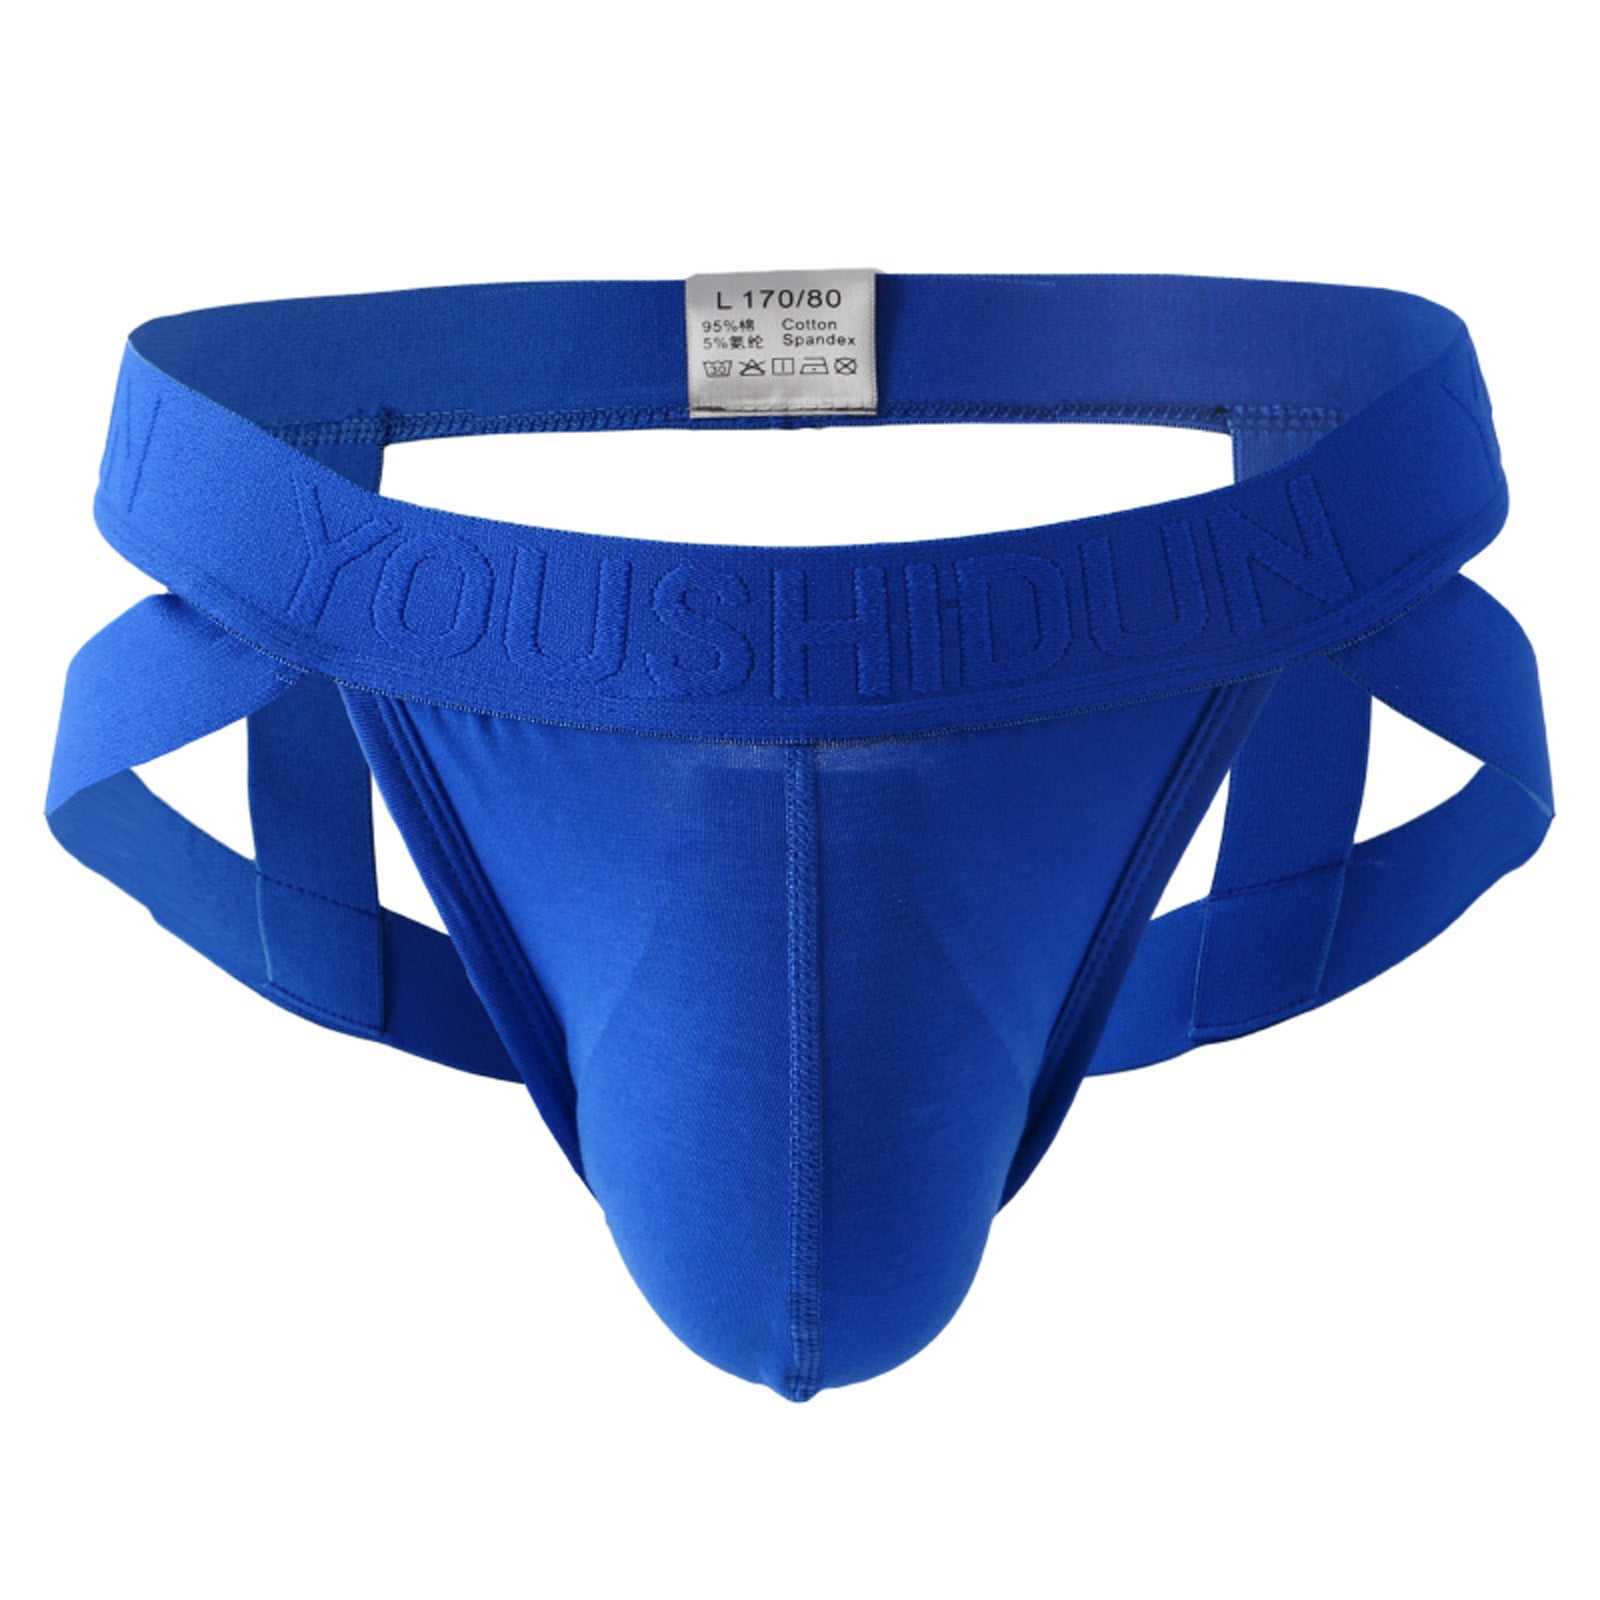 adviicd Compression Underwear For Men Boys Briefs Men's Jockstrap Supporter  Youth Breathable Cotton Underwear Blue XL 